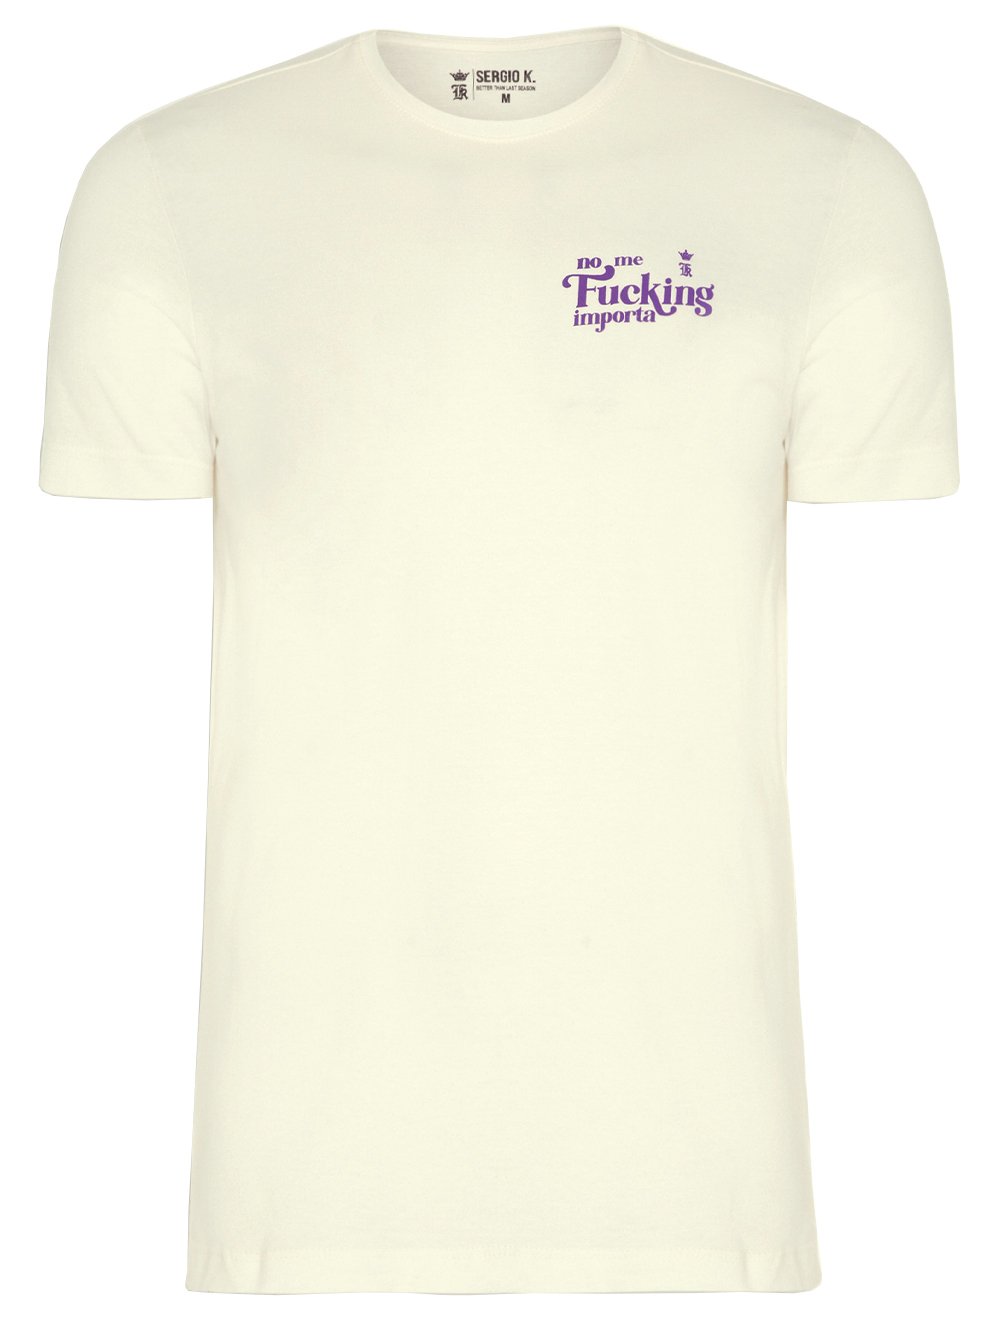 Camiseta Sergio K Masculina No Me F_cking Importa Off-White